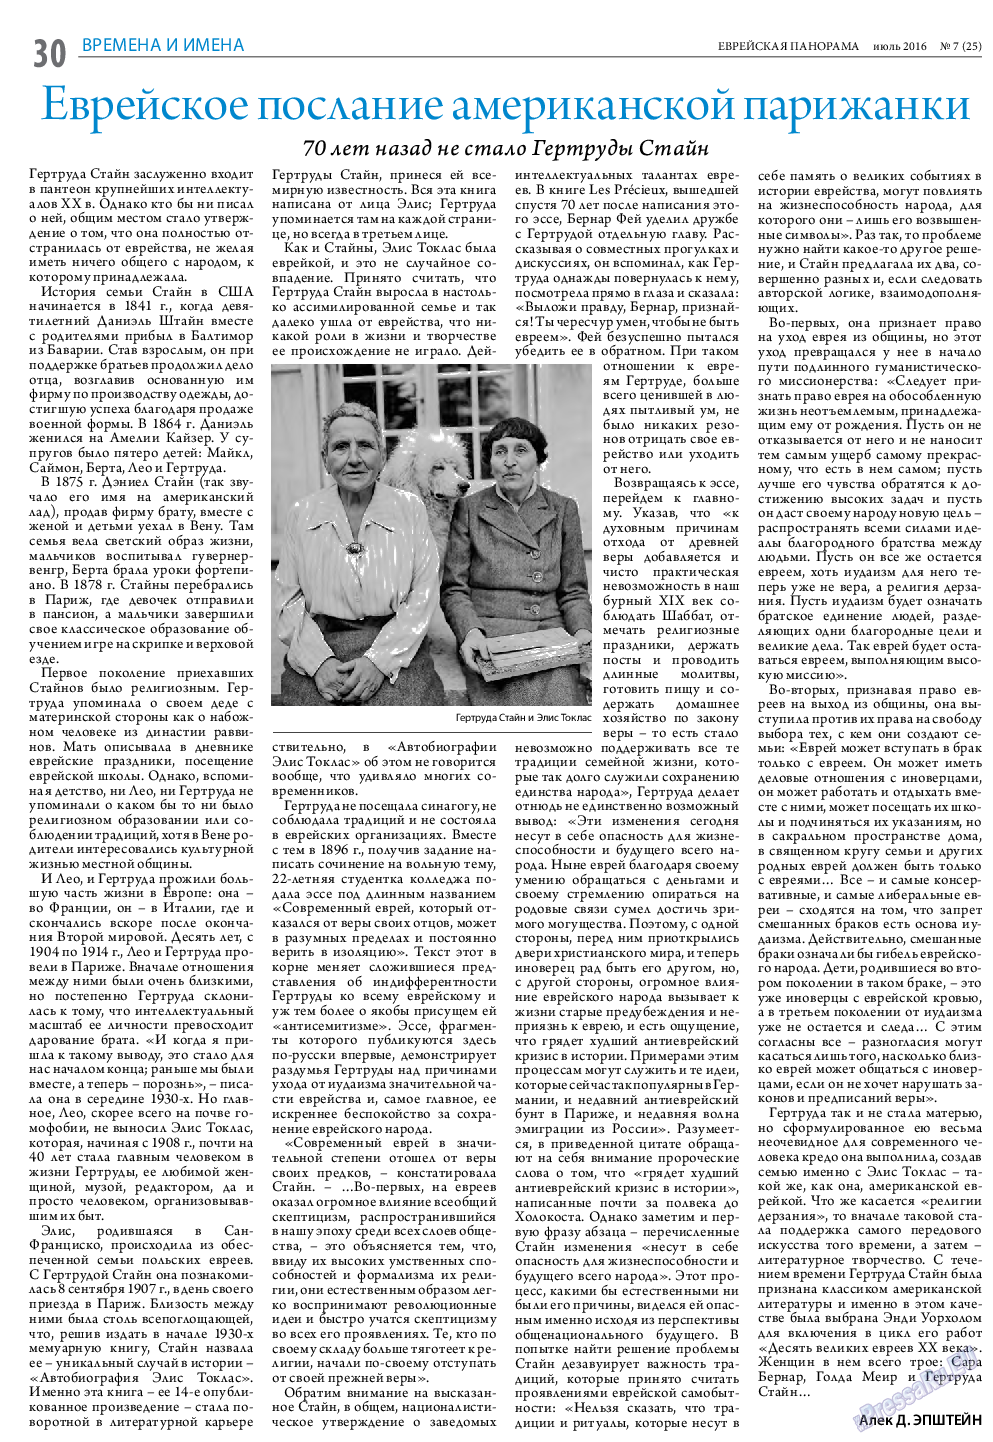 Еврейская панорама, газета. 2016 №7 стр.30